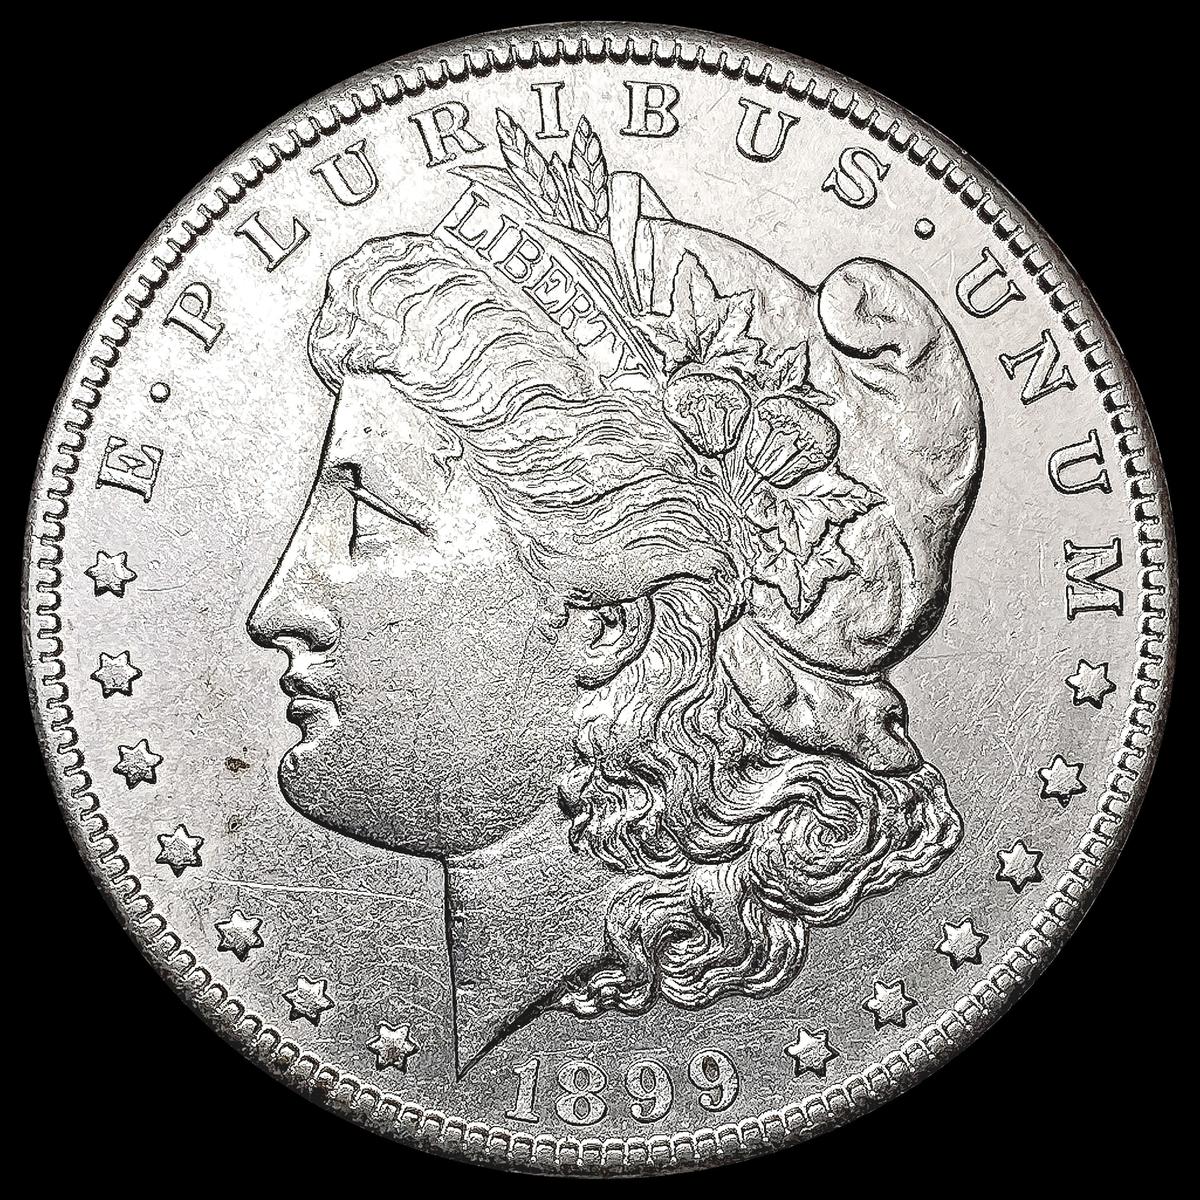 1899-S Morgan Silver Dollar CHOICE AU